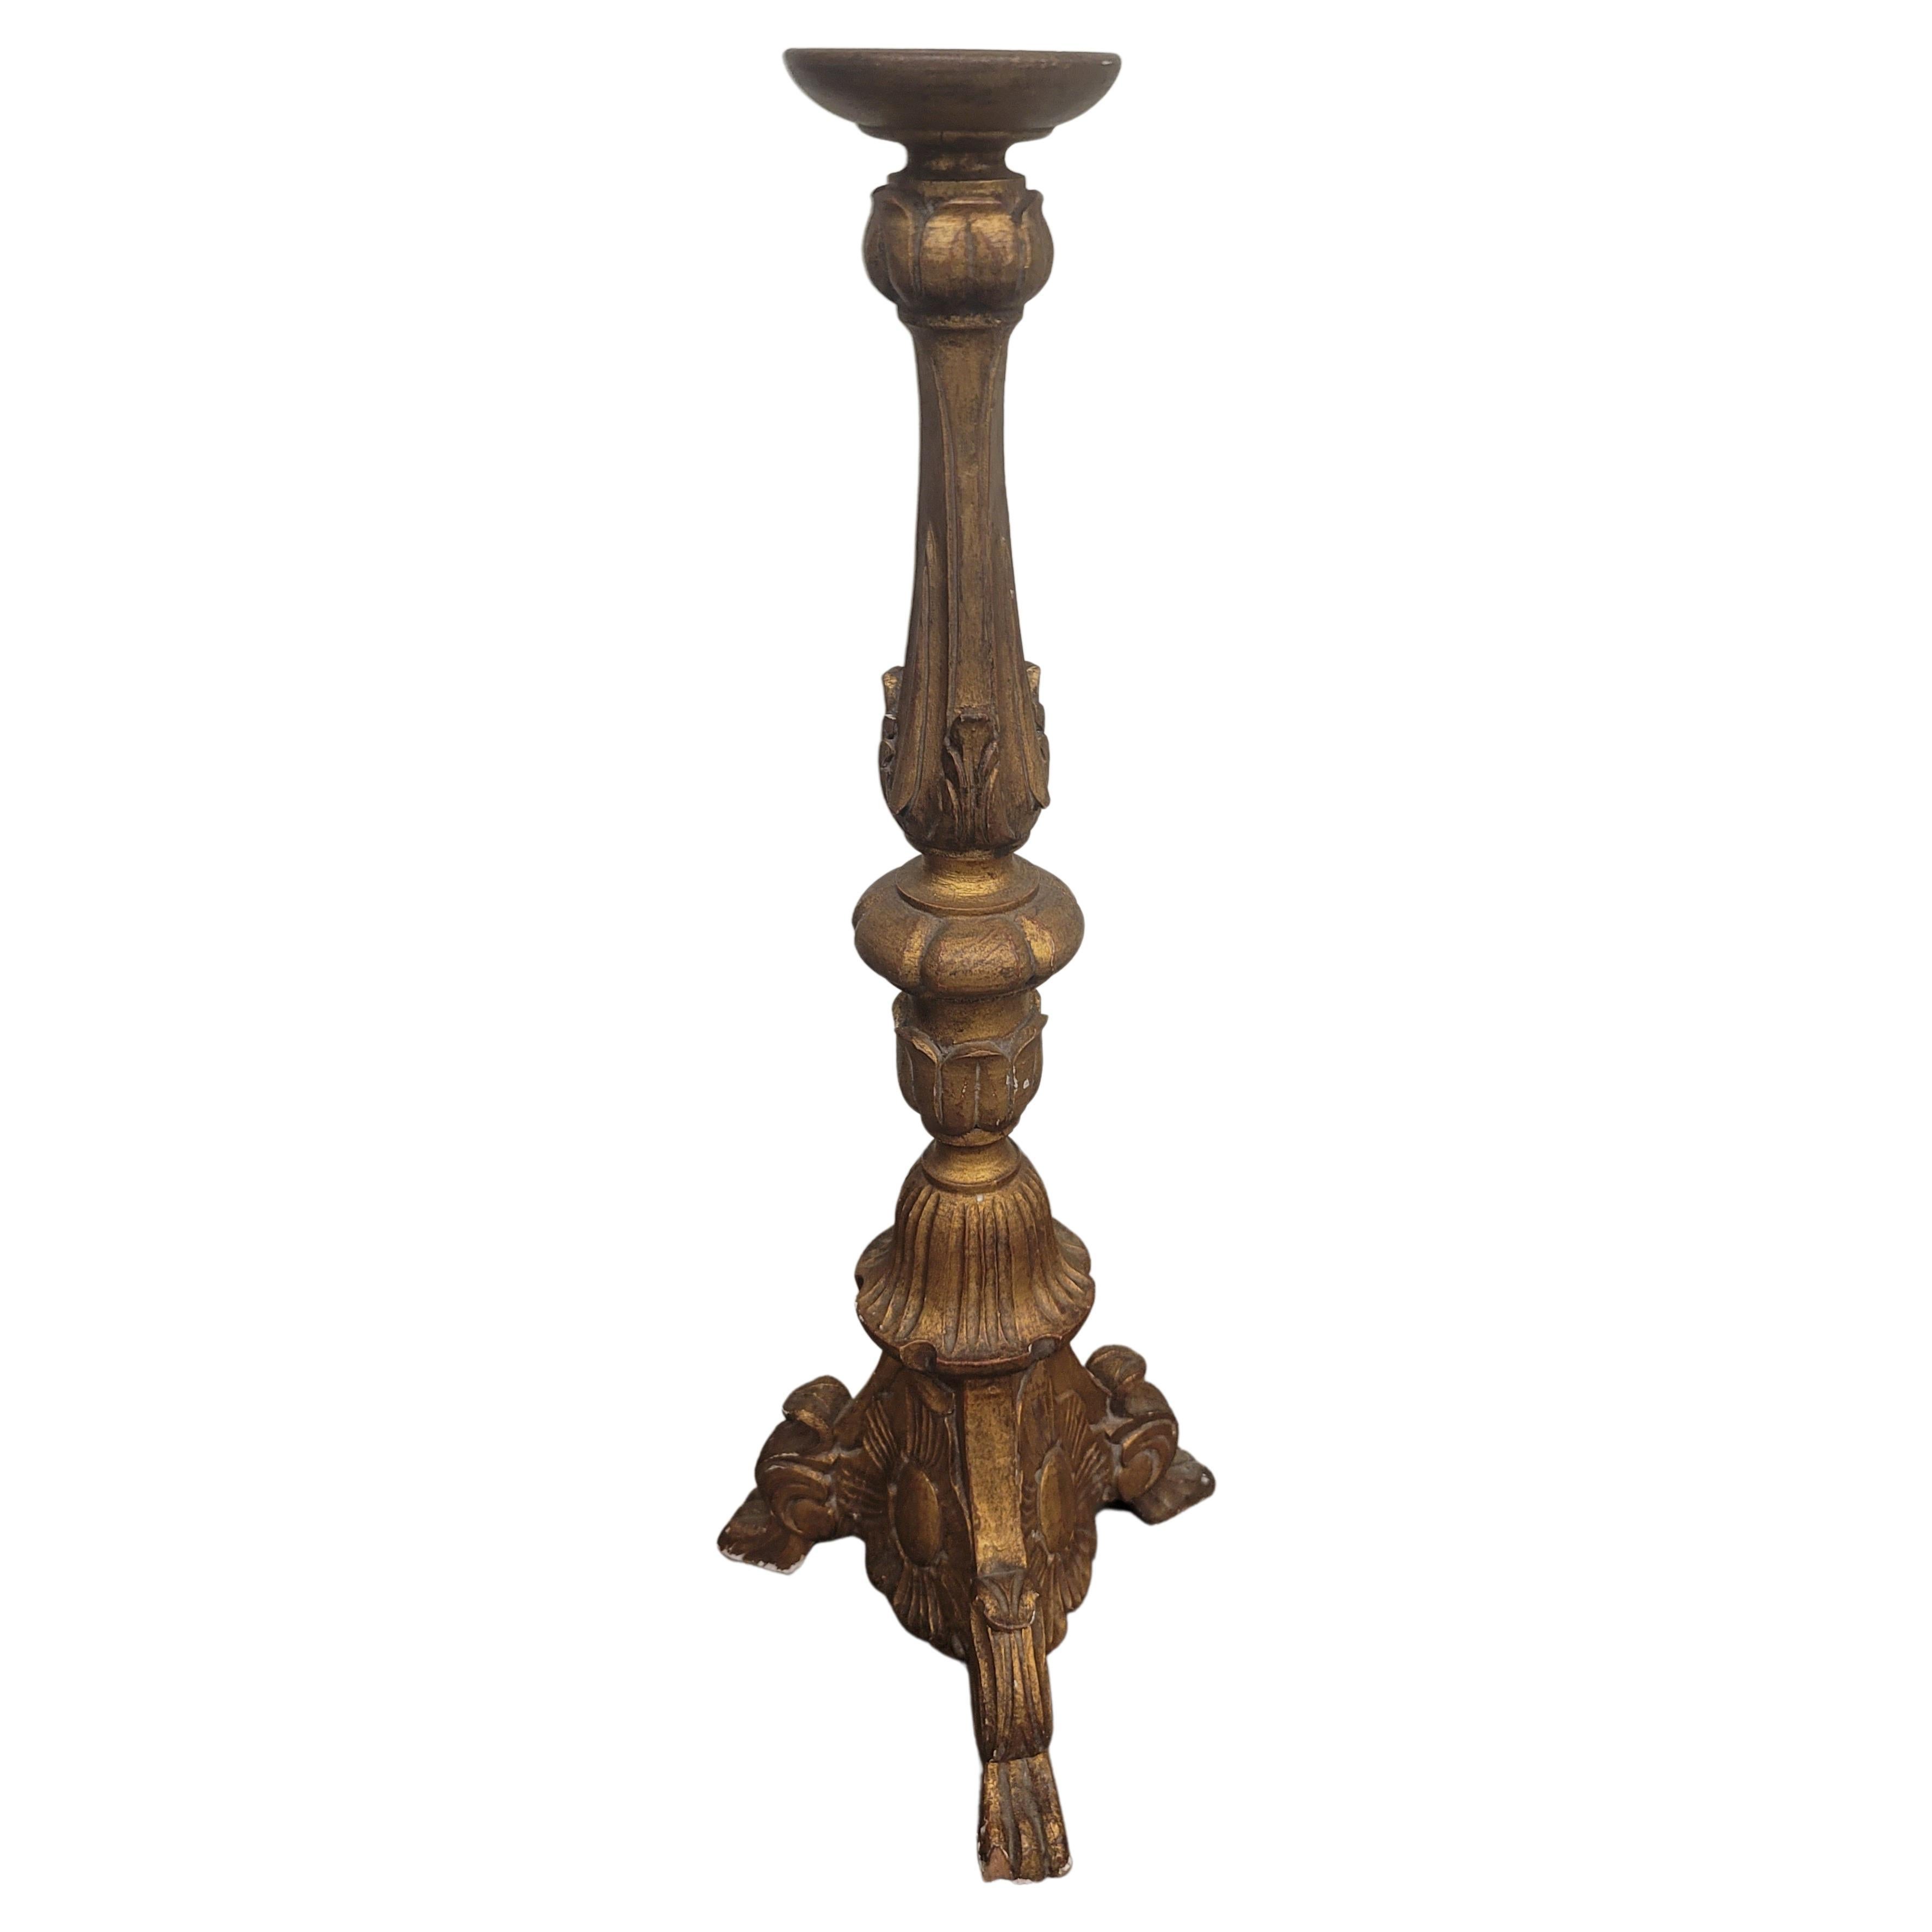 Antique Italian Gilt Wood Pricket Floor Altar or Candlestick